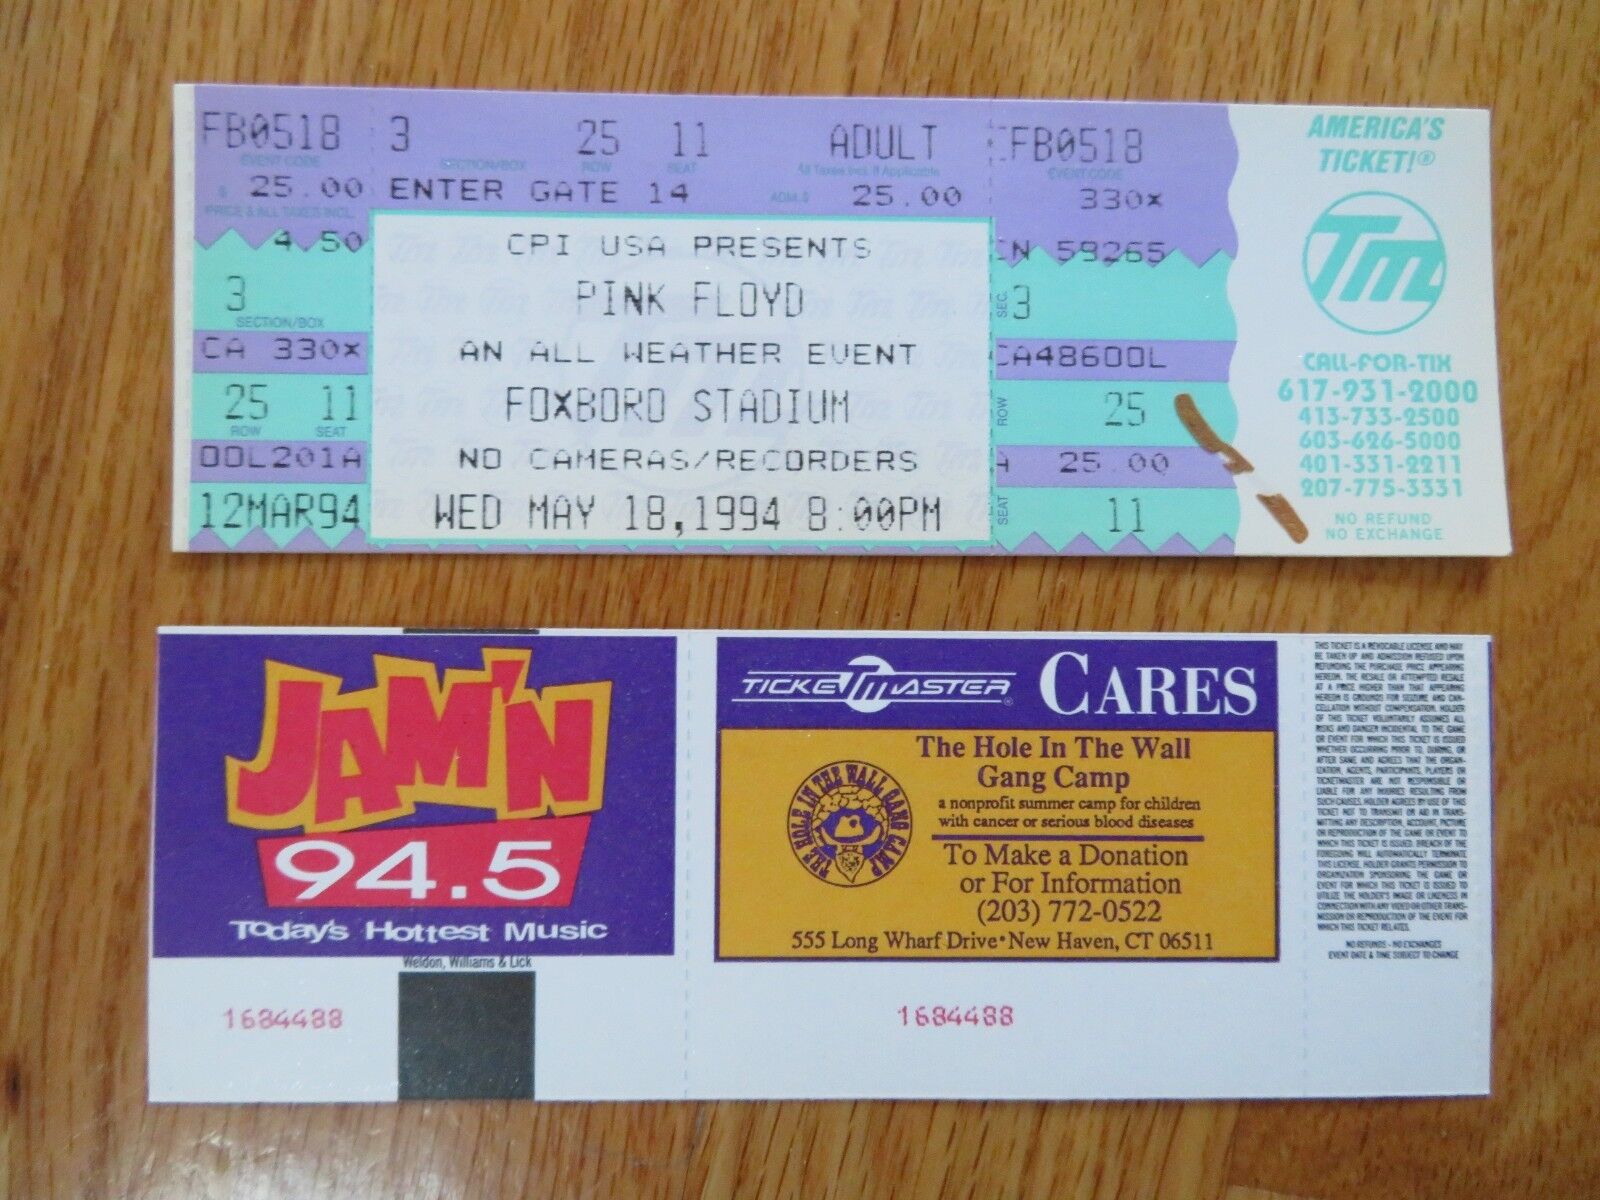 UNUSED PINK FLOYD May 18 1994 Concert Ticket Washington Mall STADIUM FOXBORO Financial sales sale WA